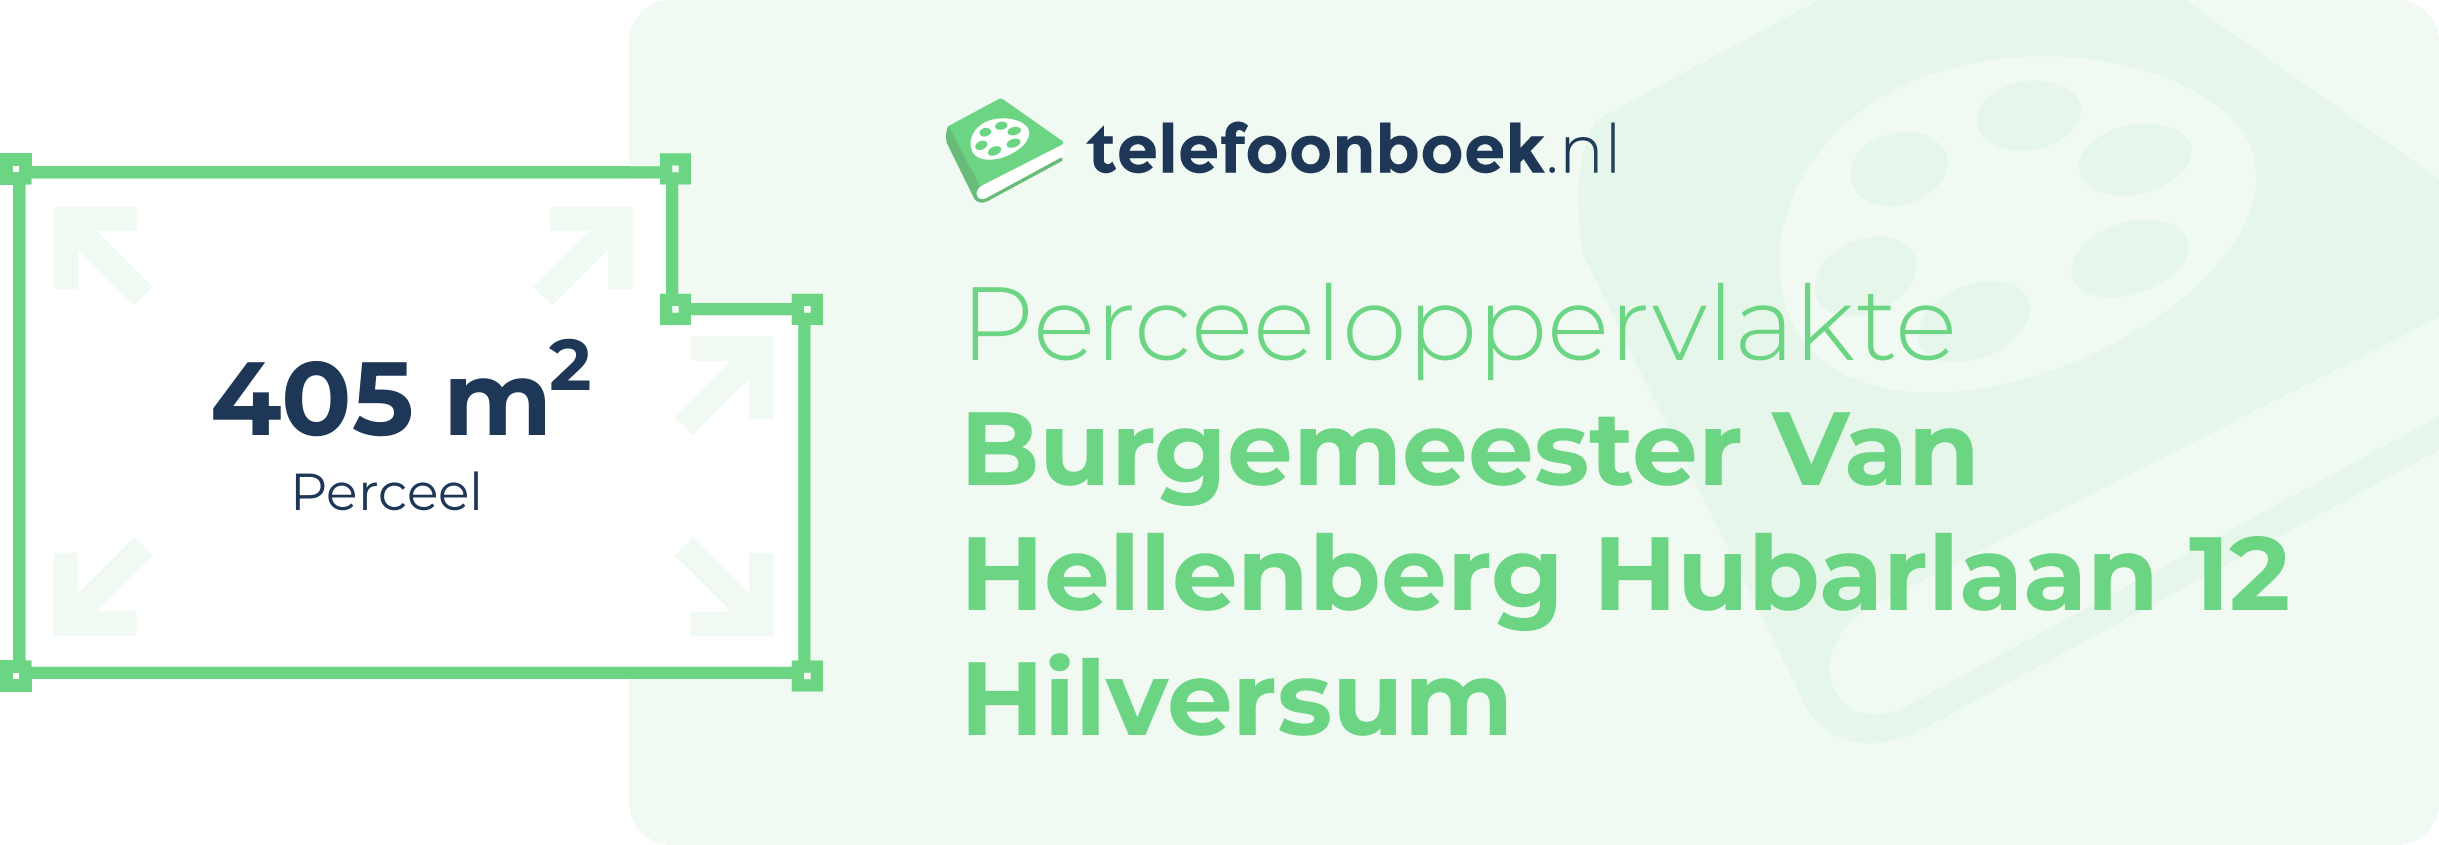 Perceeloppervlakte Burgemeester Van Hellenberg Hubarlaan 12 Hilversum